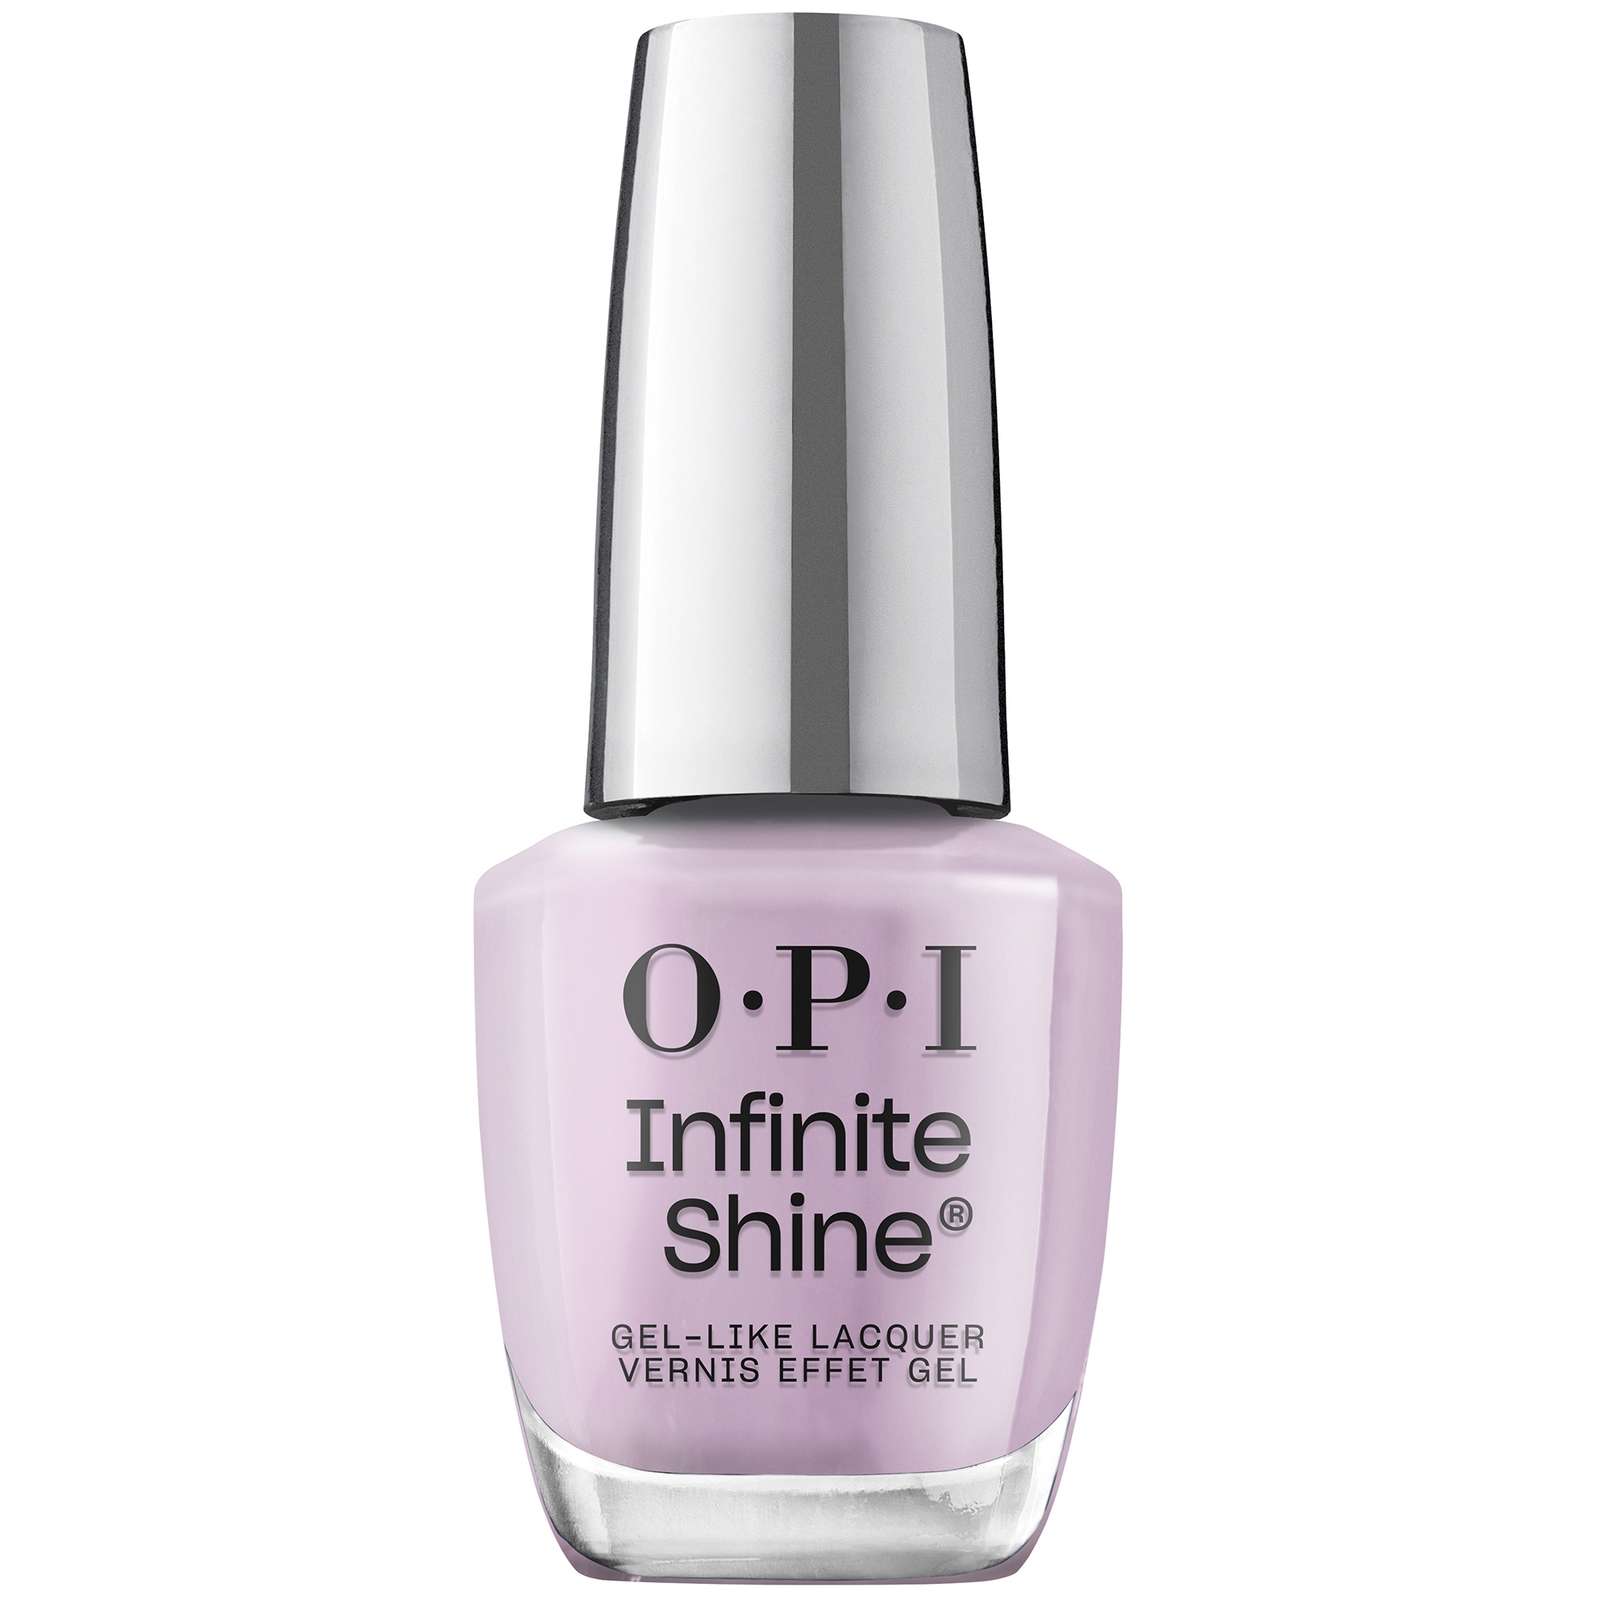 Opi Infinite Shine Long-wear Nail Polish - Last Glam Standing 15ml In White